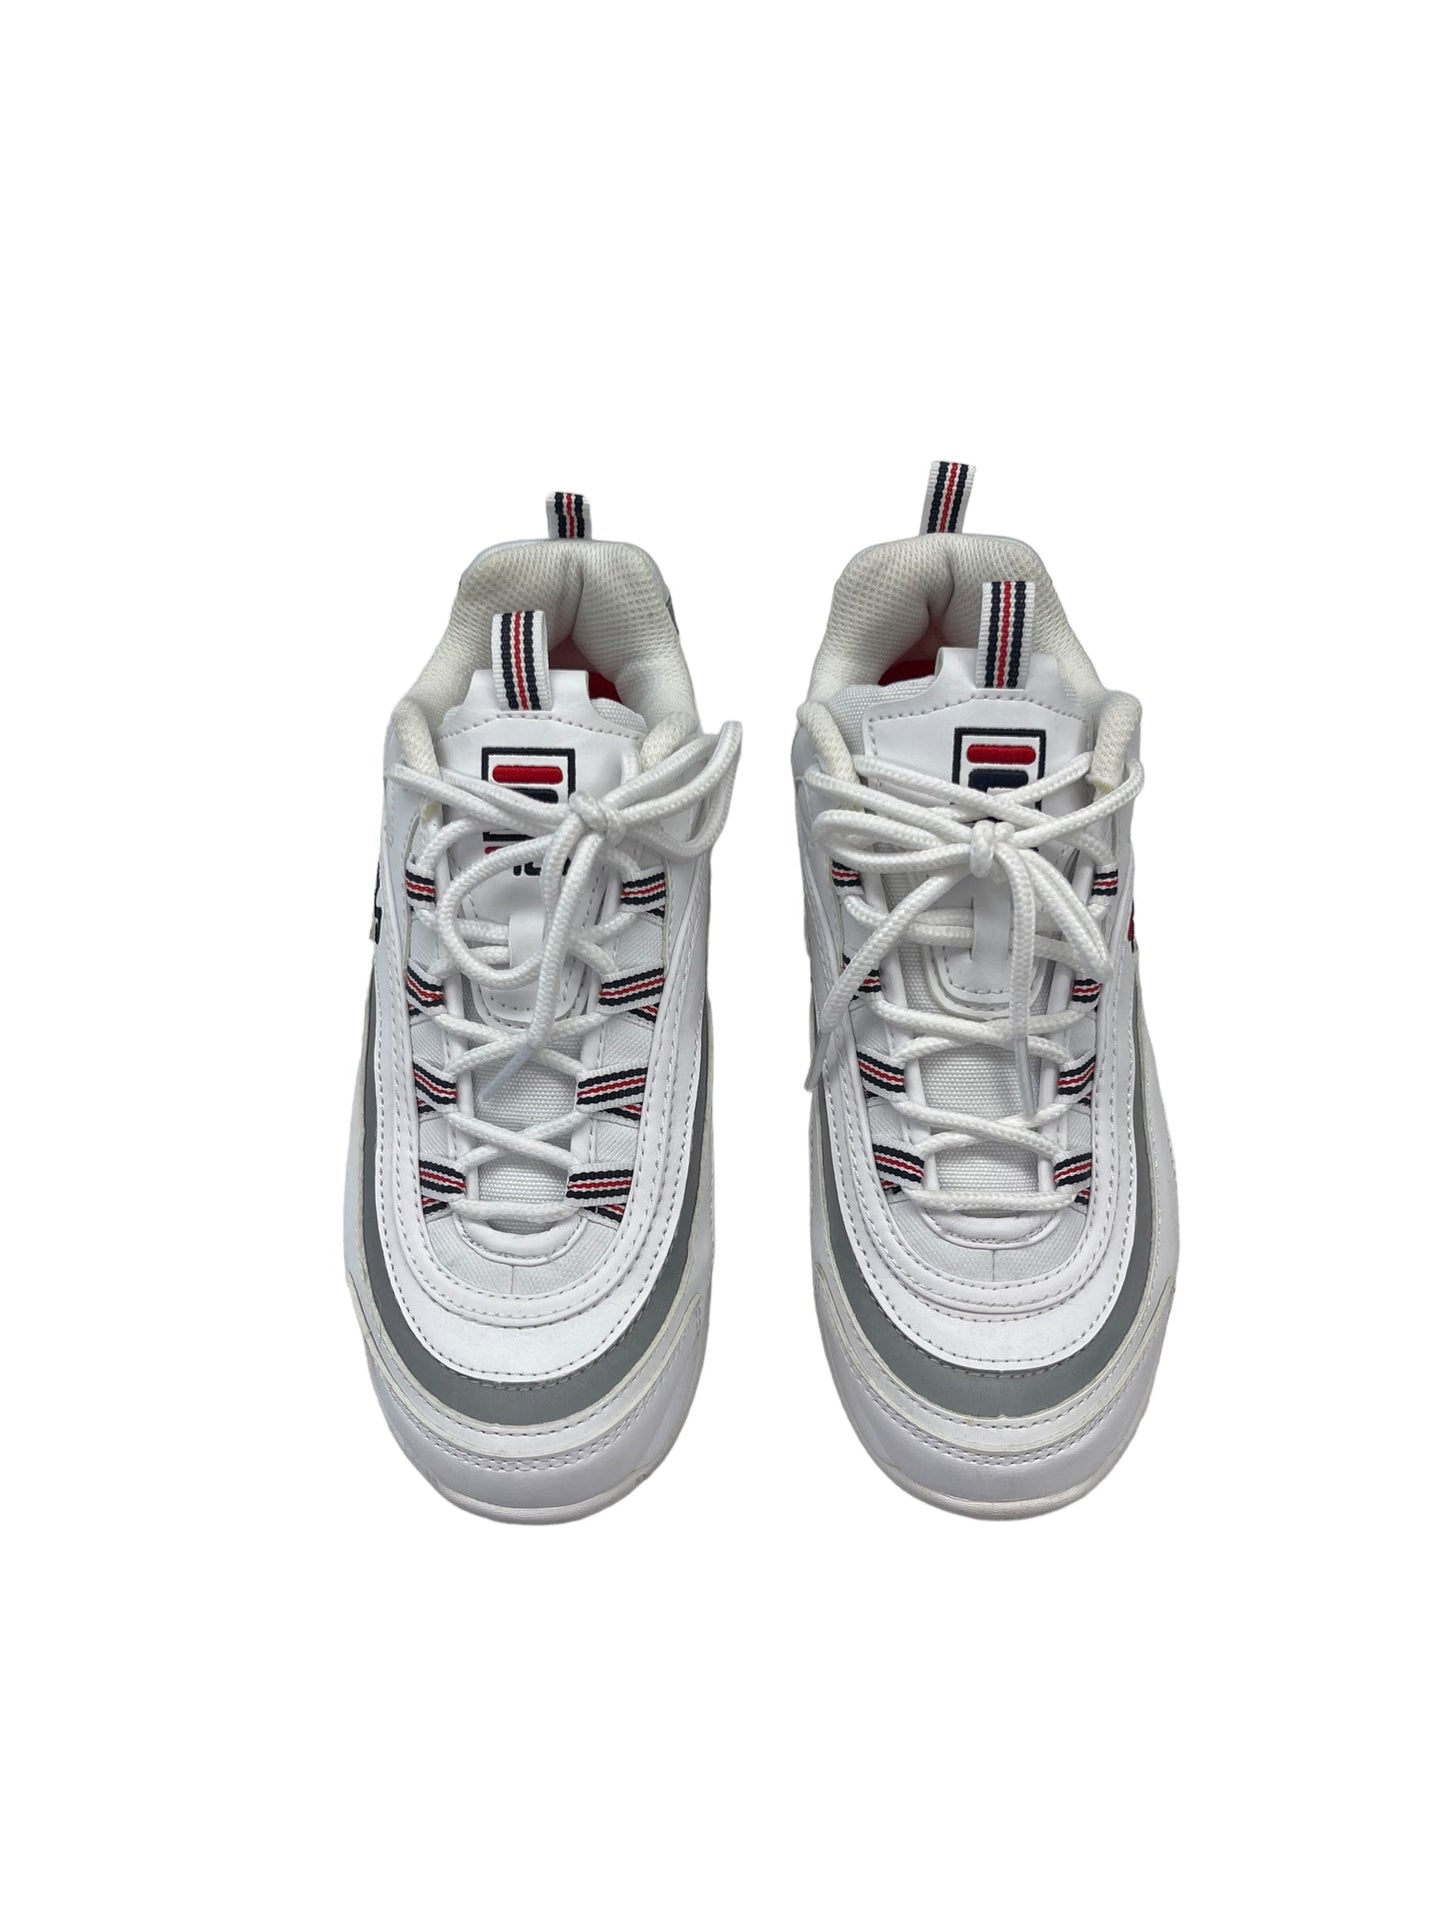 White Shoes Athletic Fila, Size 8